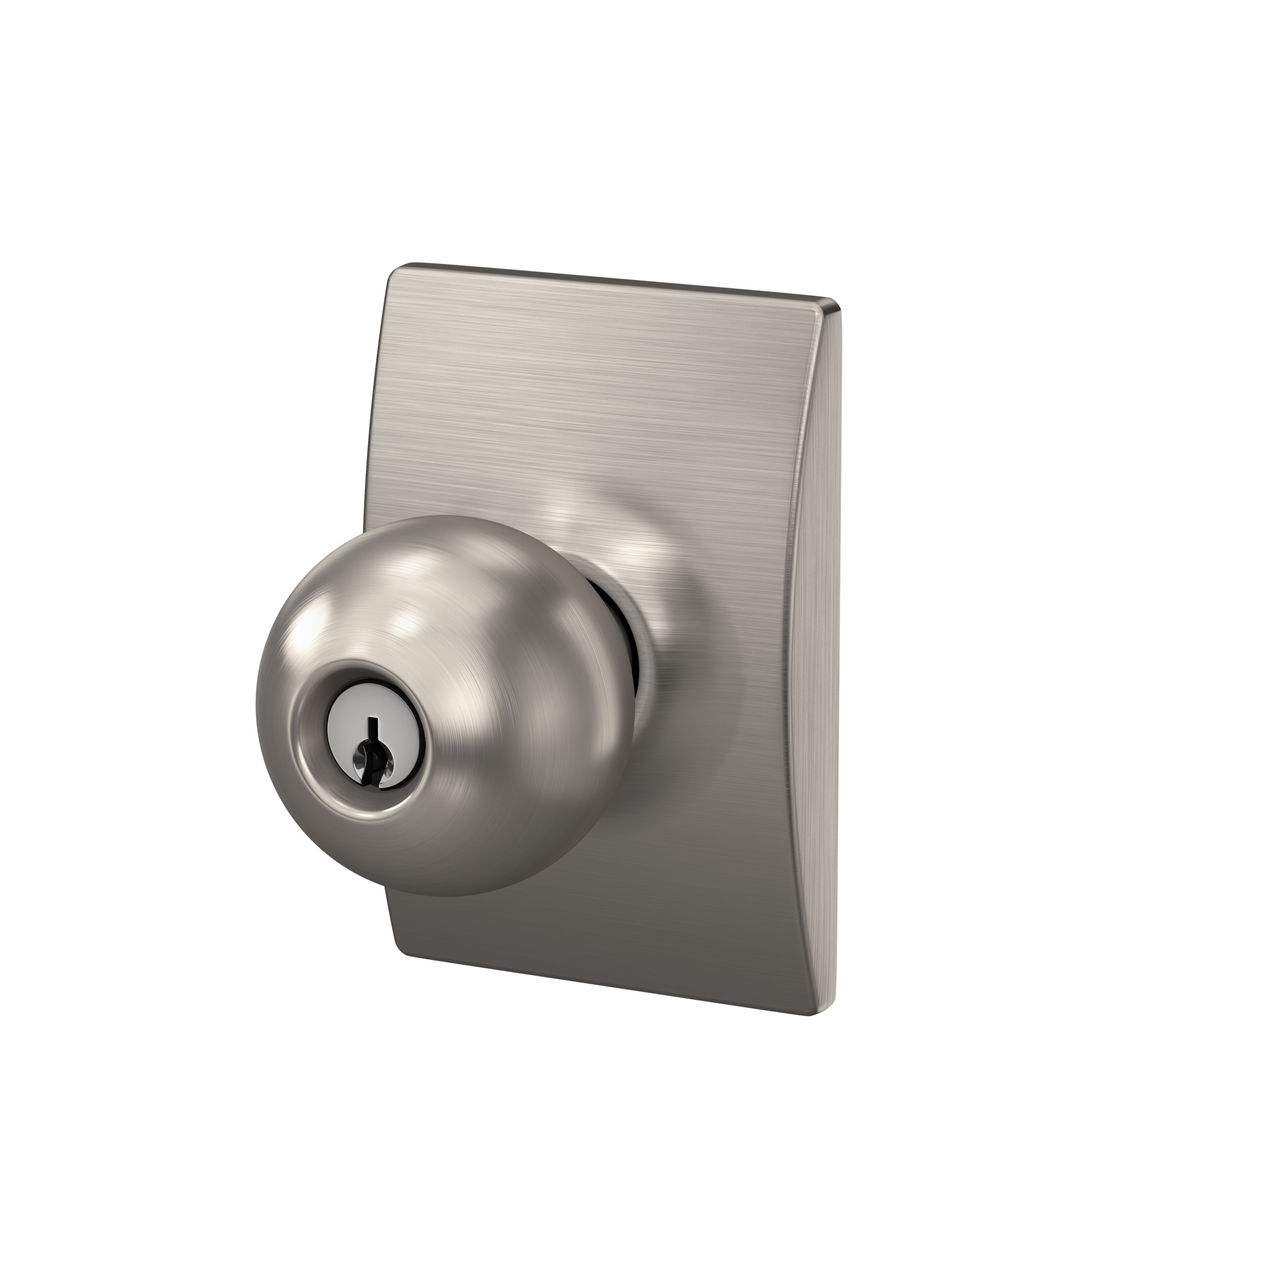 Orbit Knob Keyed Entry Lock